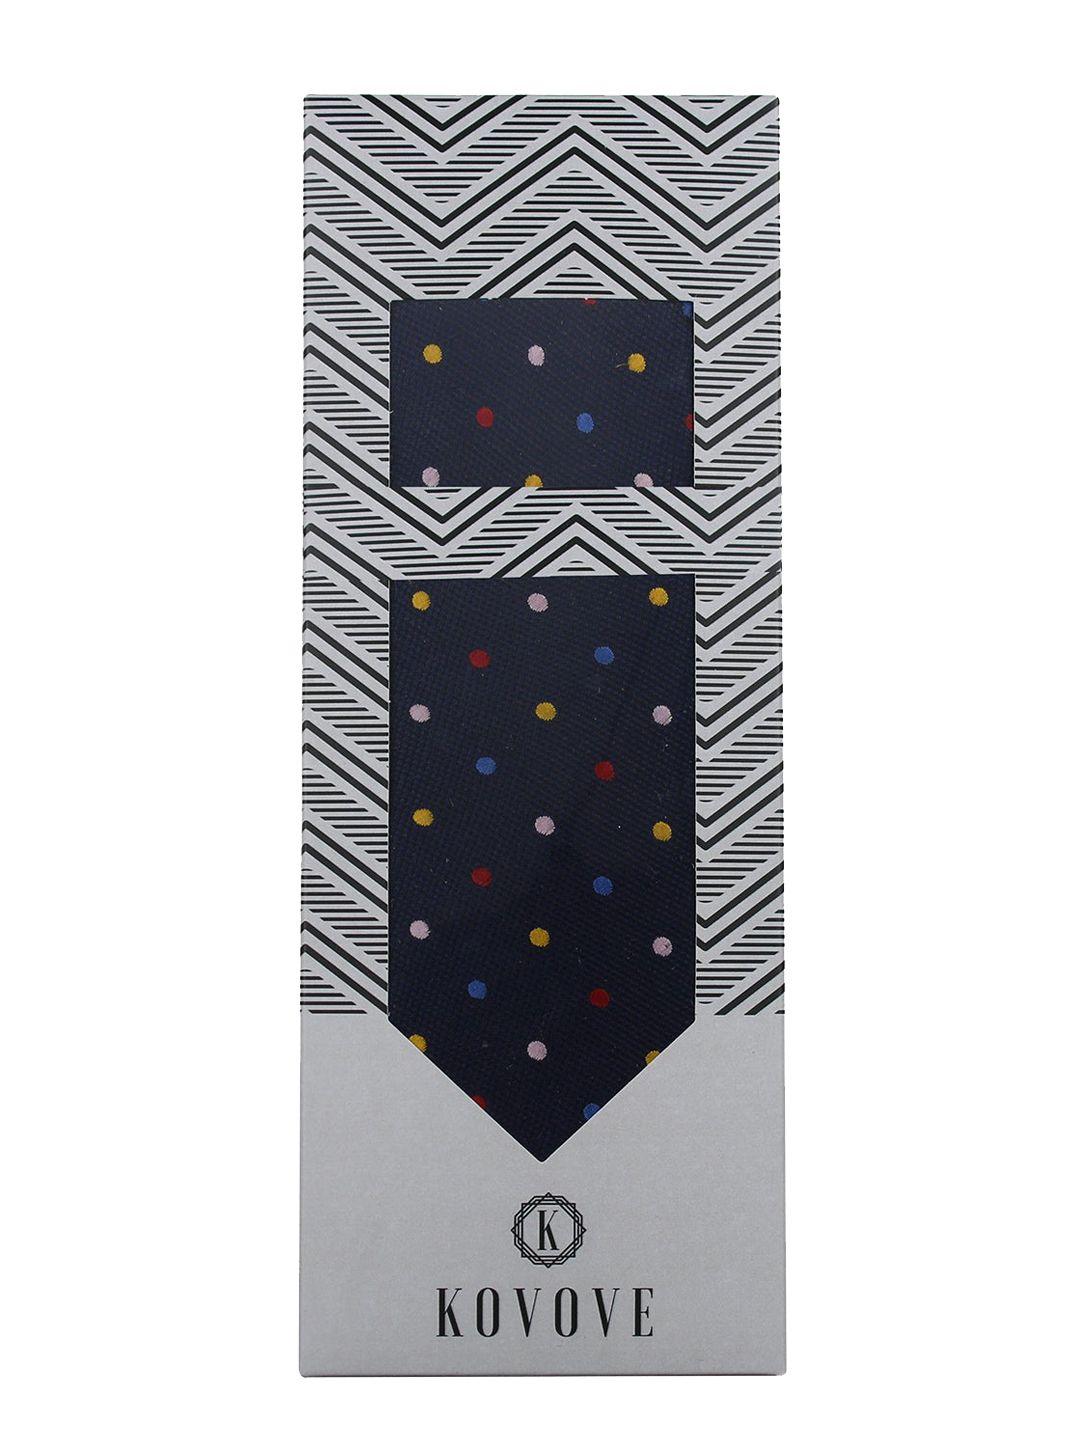 kovove navy blue polka dots tie with pocket square